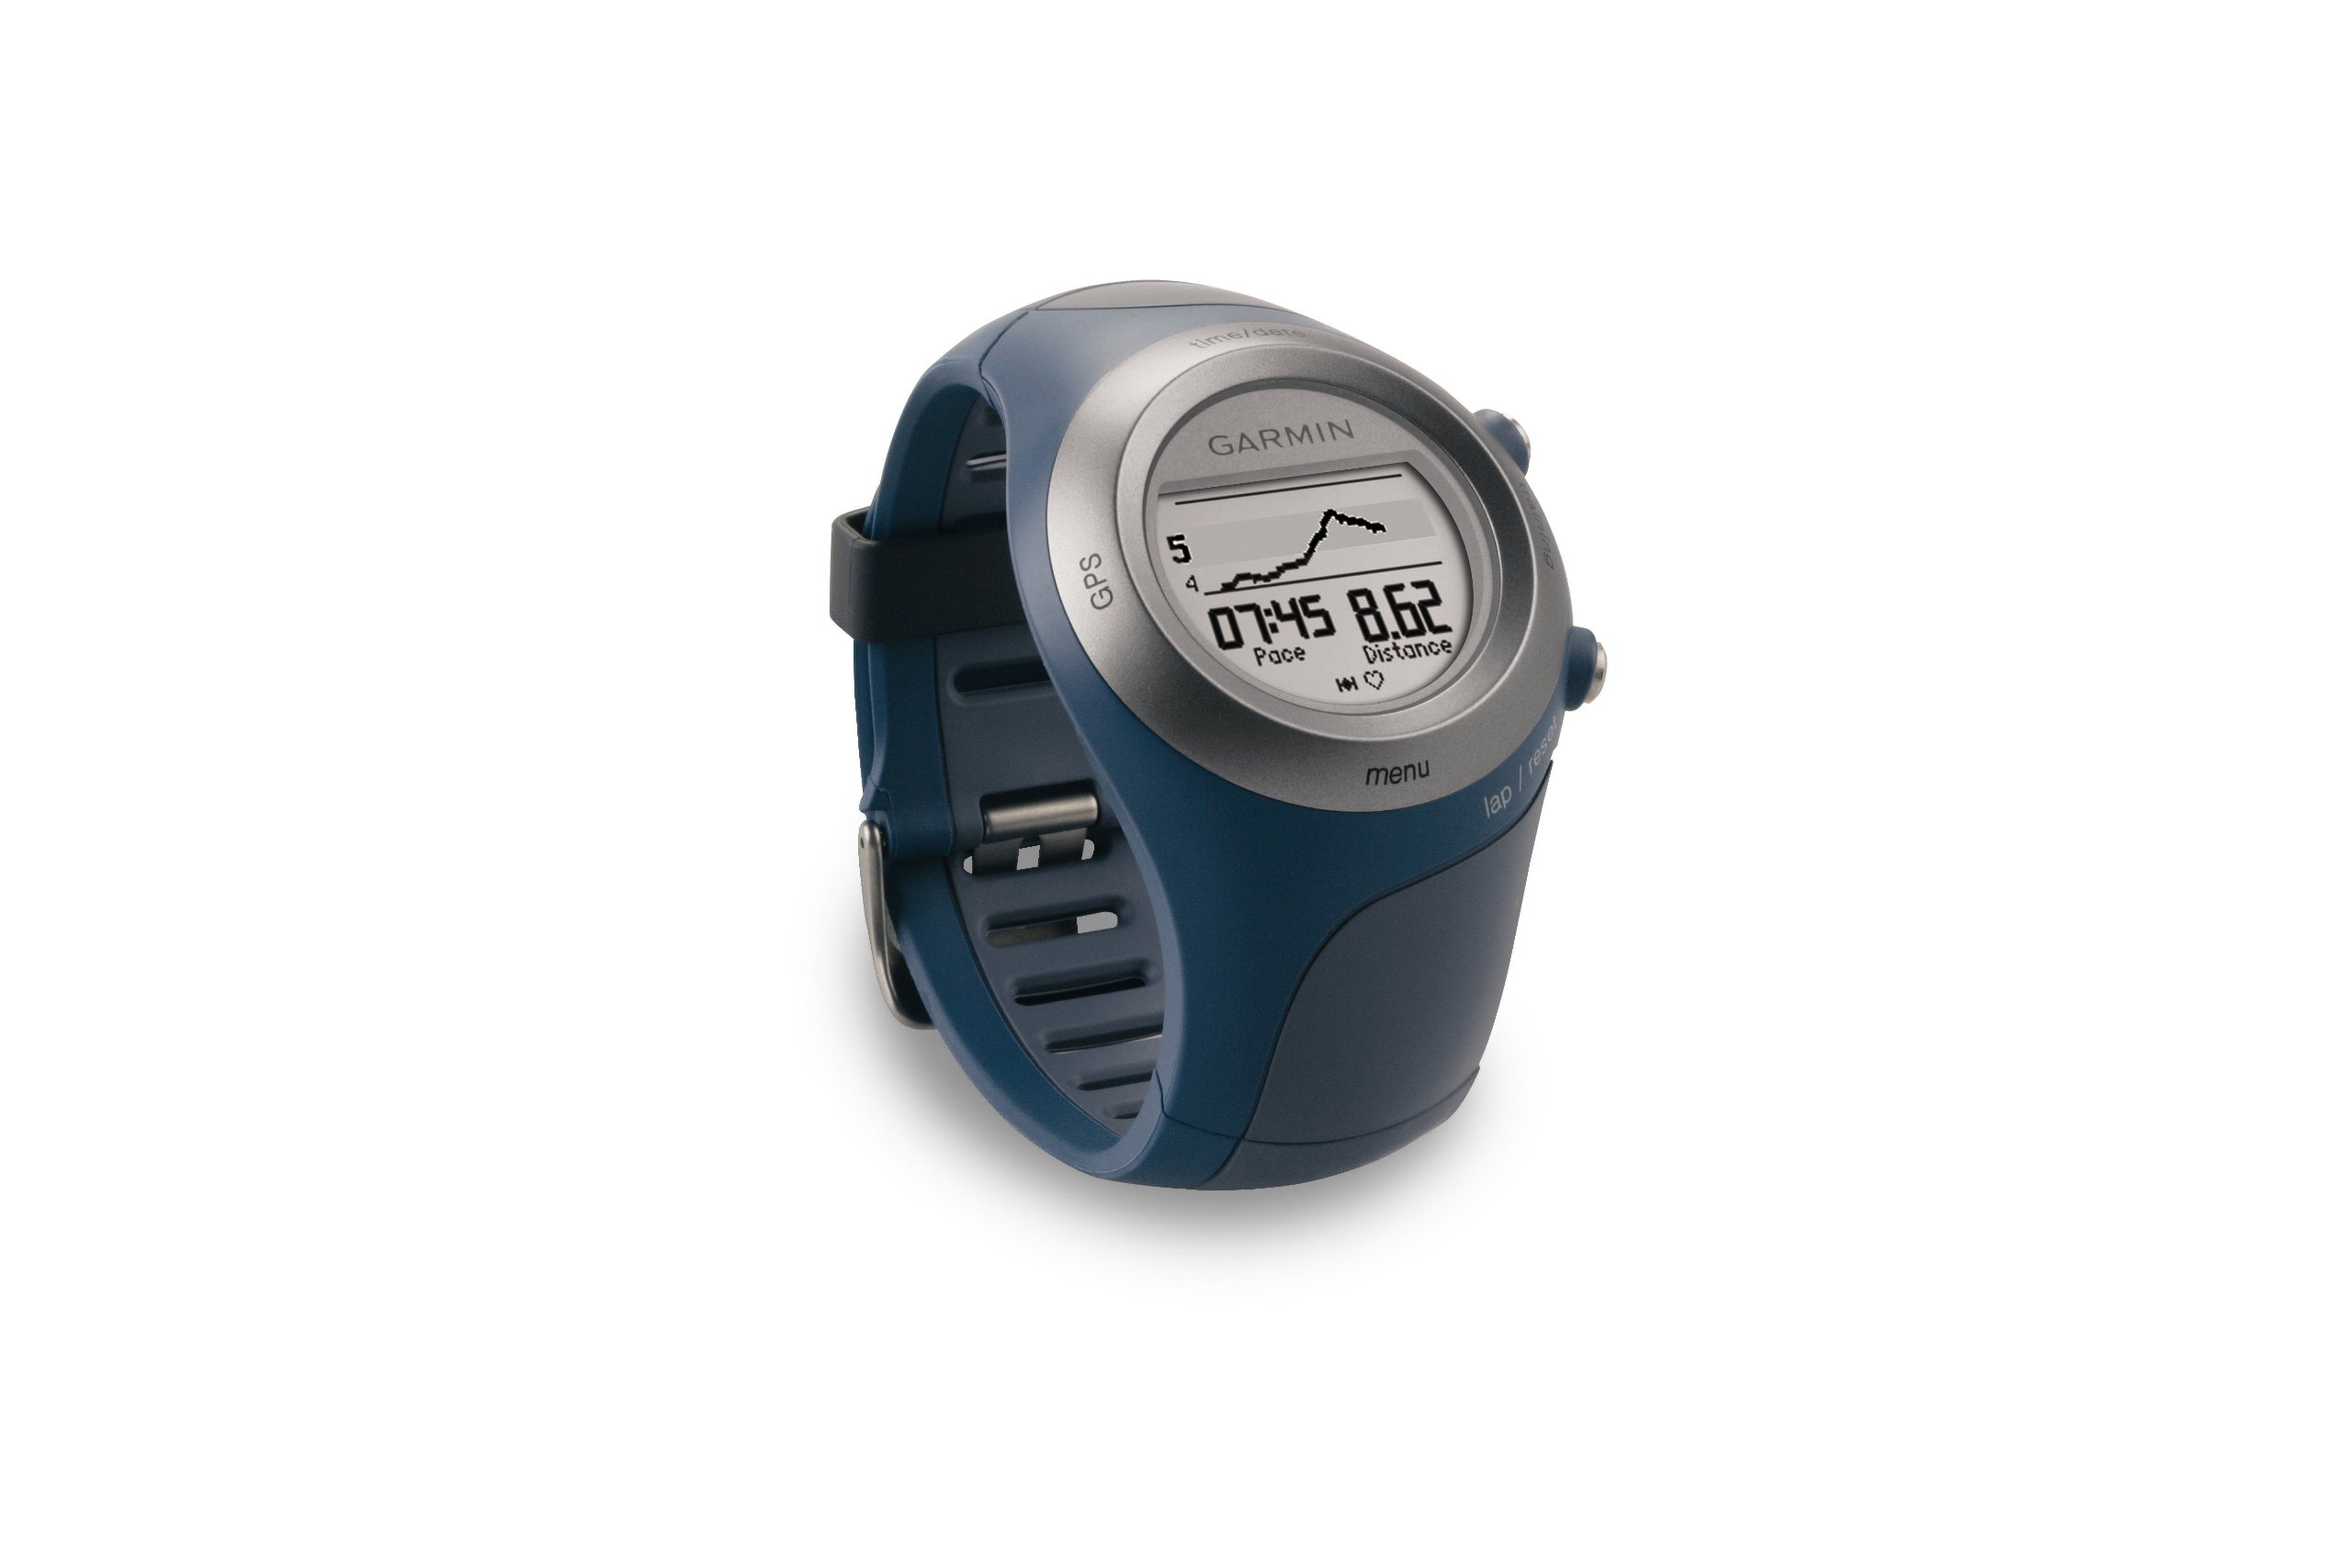 Garmin Forerunner 405CX GPS Sport Watch with Heart Rate Monitor (Blue)